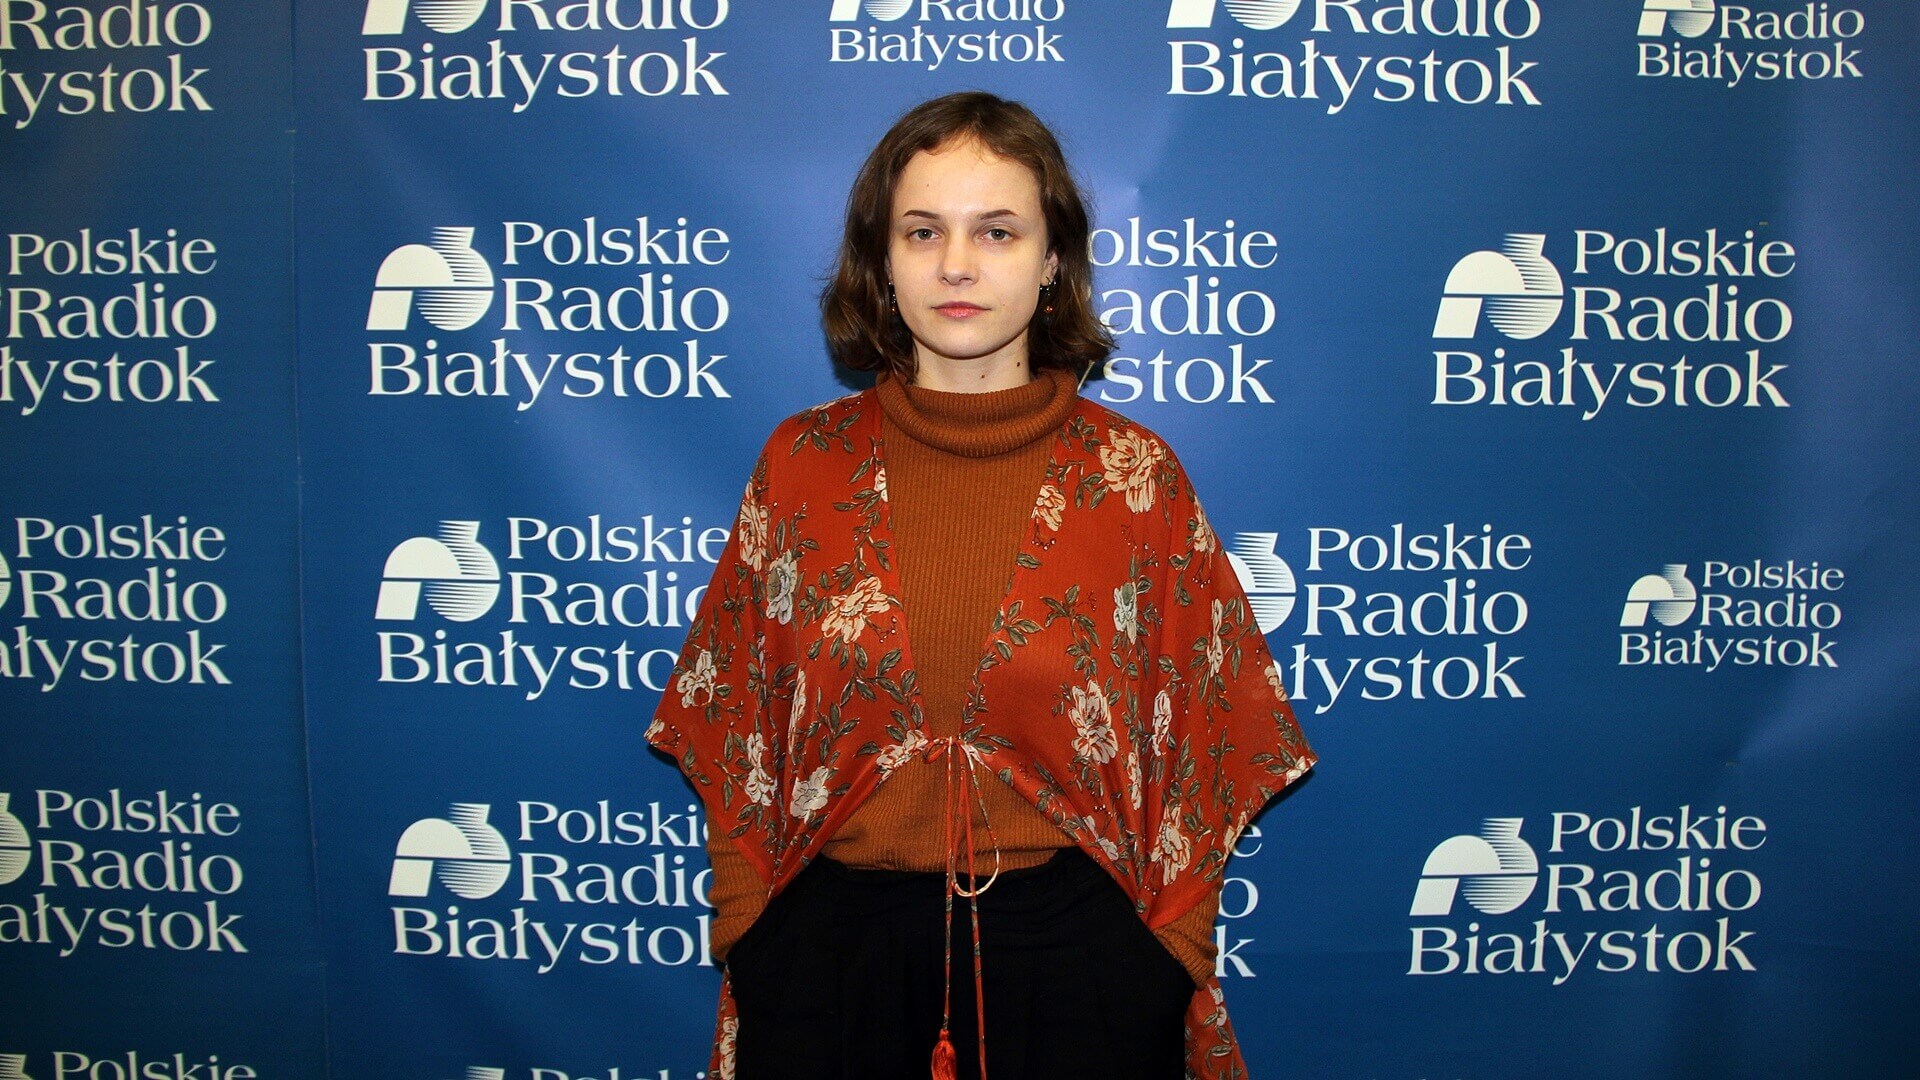 Monika Piskurevicz, fot. Marcelina Markowska